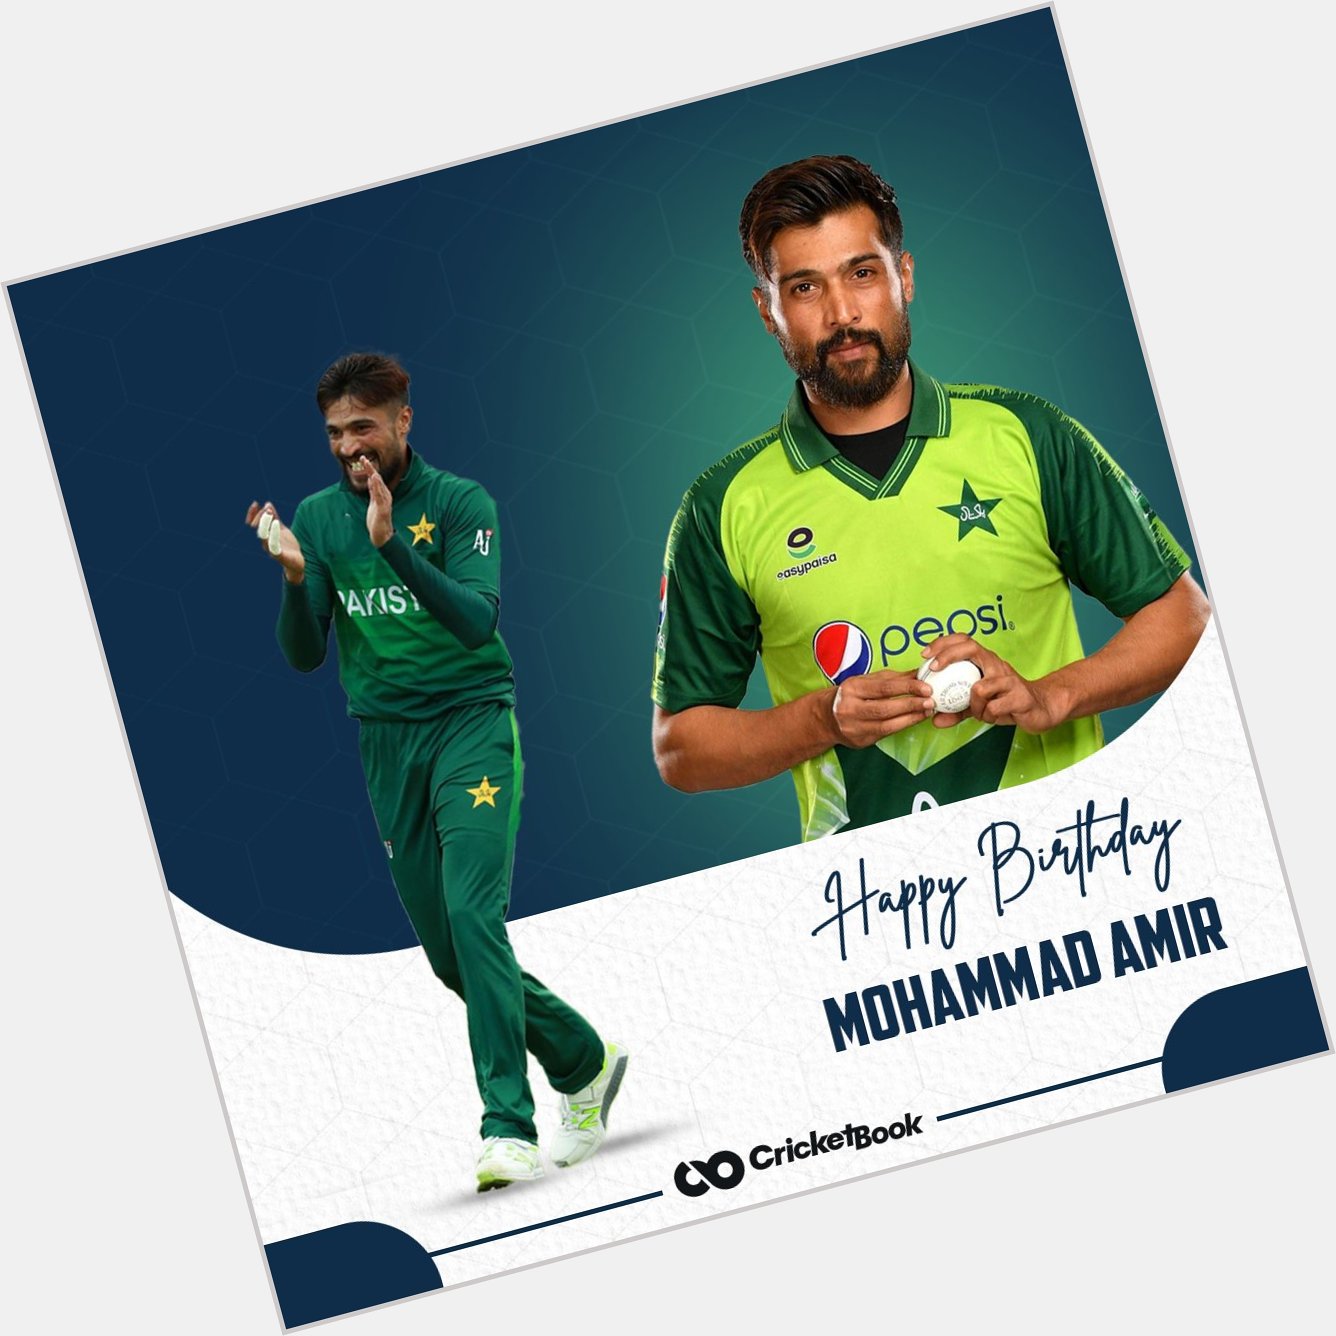 Wishing Mohammad Amir a happy 31st birthday!   